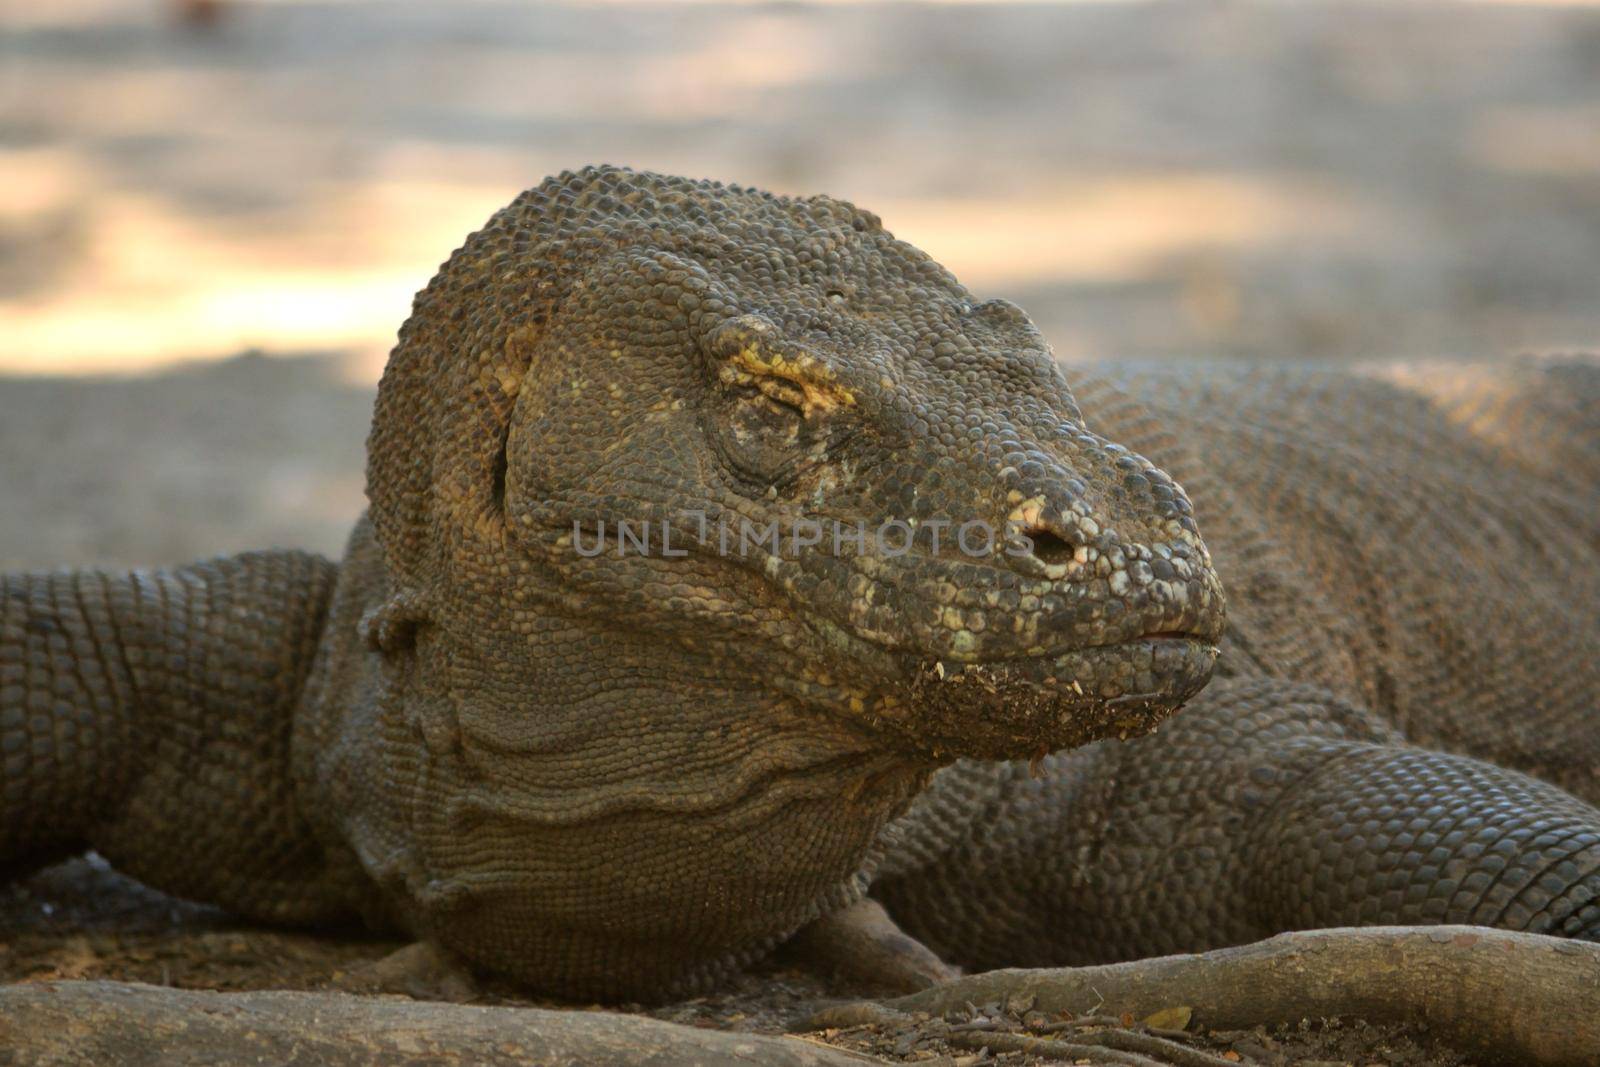 Closeup of a komodo dragon in Komodo National Park by silentstock639